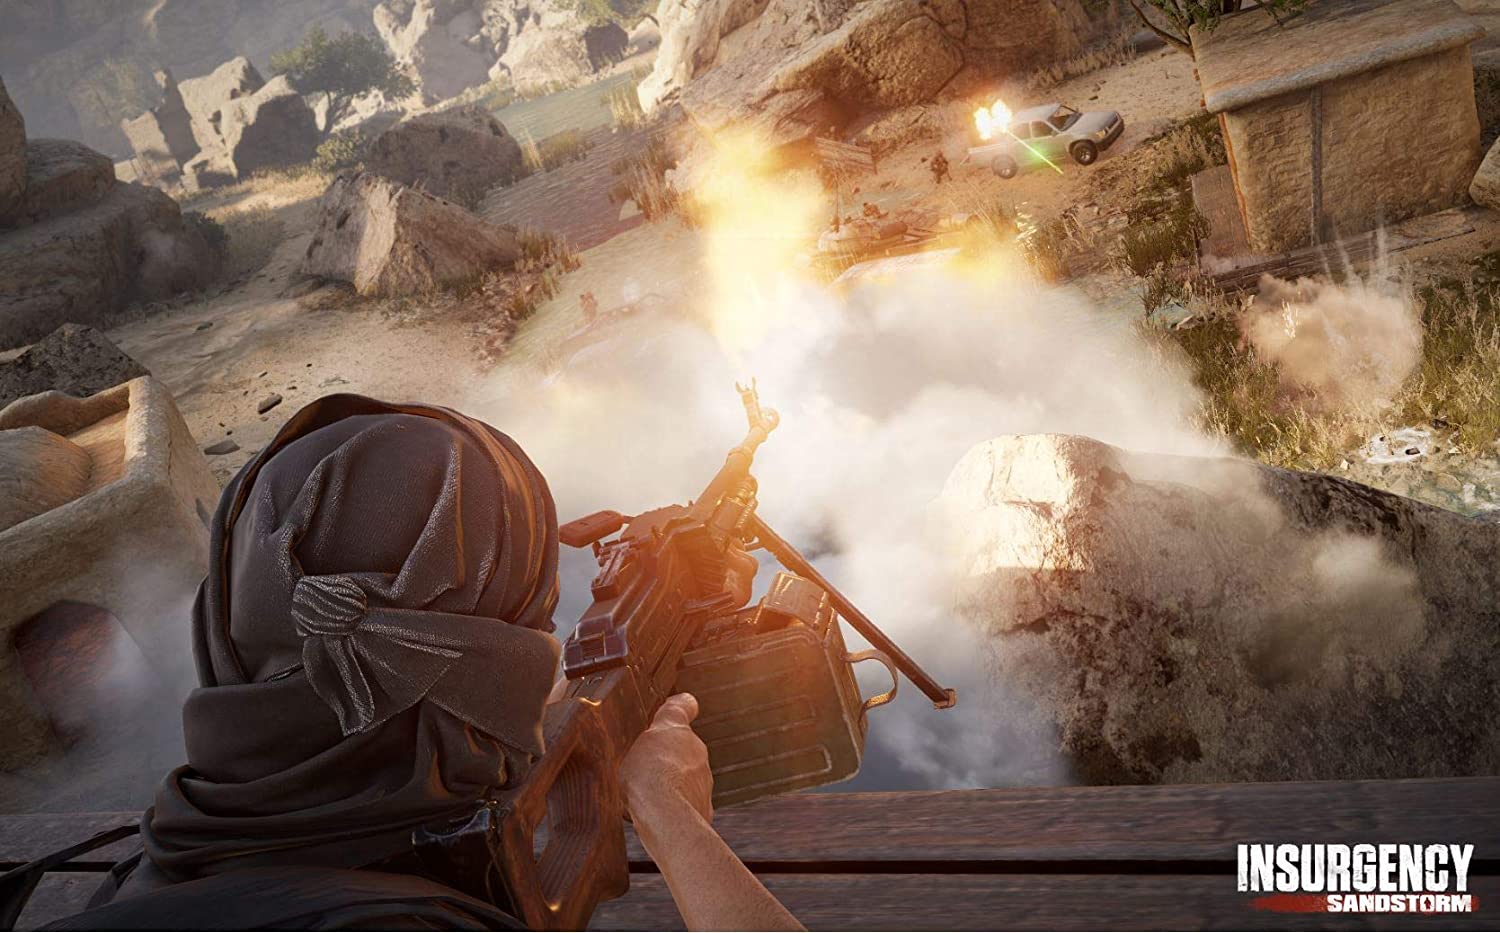 Insurgency: Sandstorm, o jogo de guerra realista recebe trailer